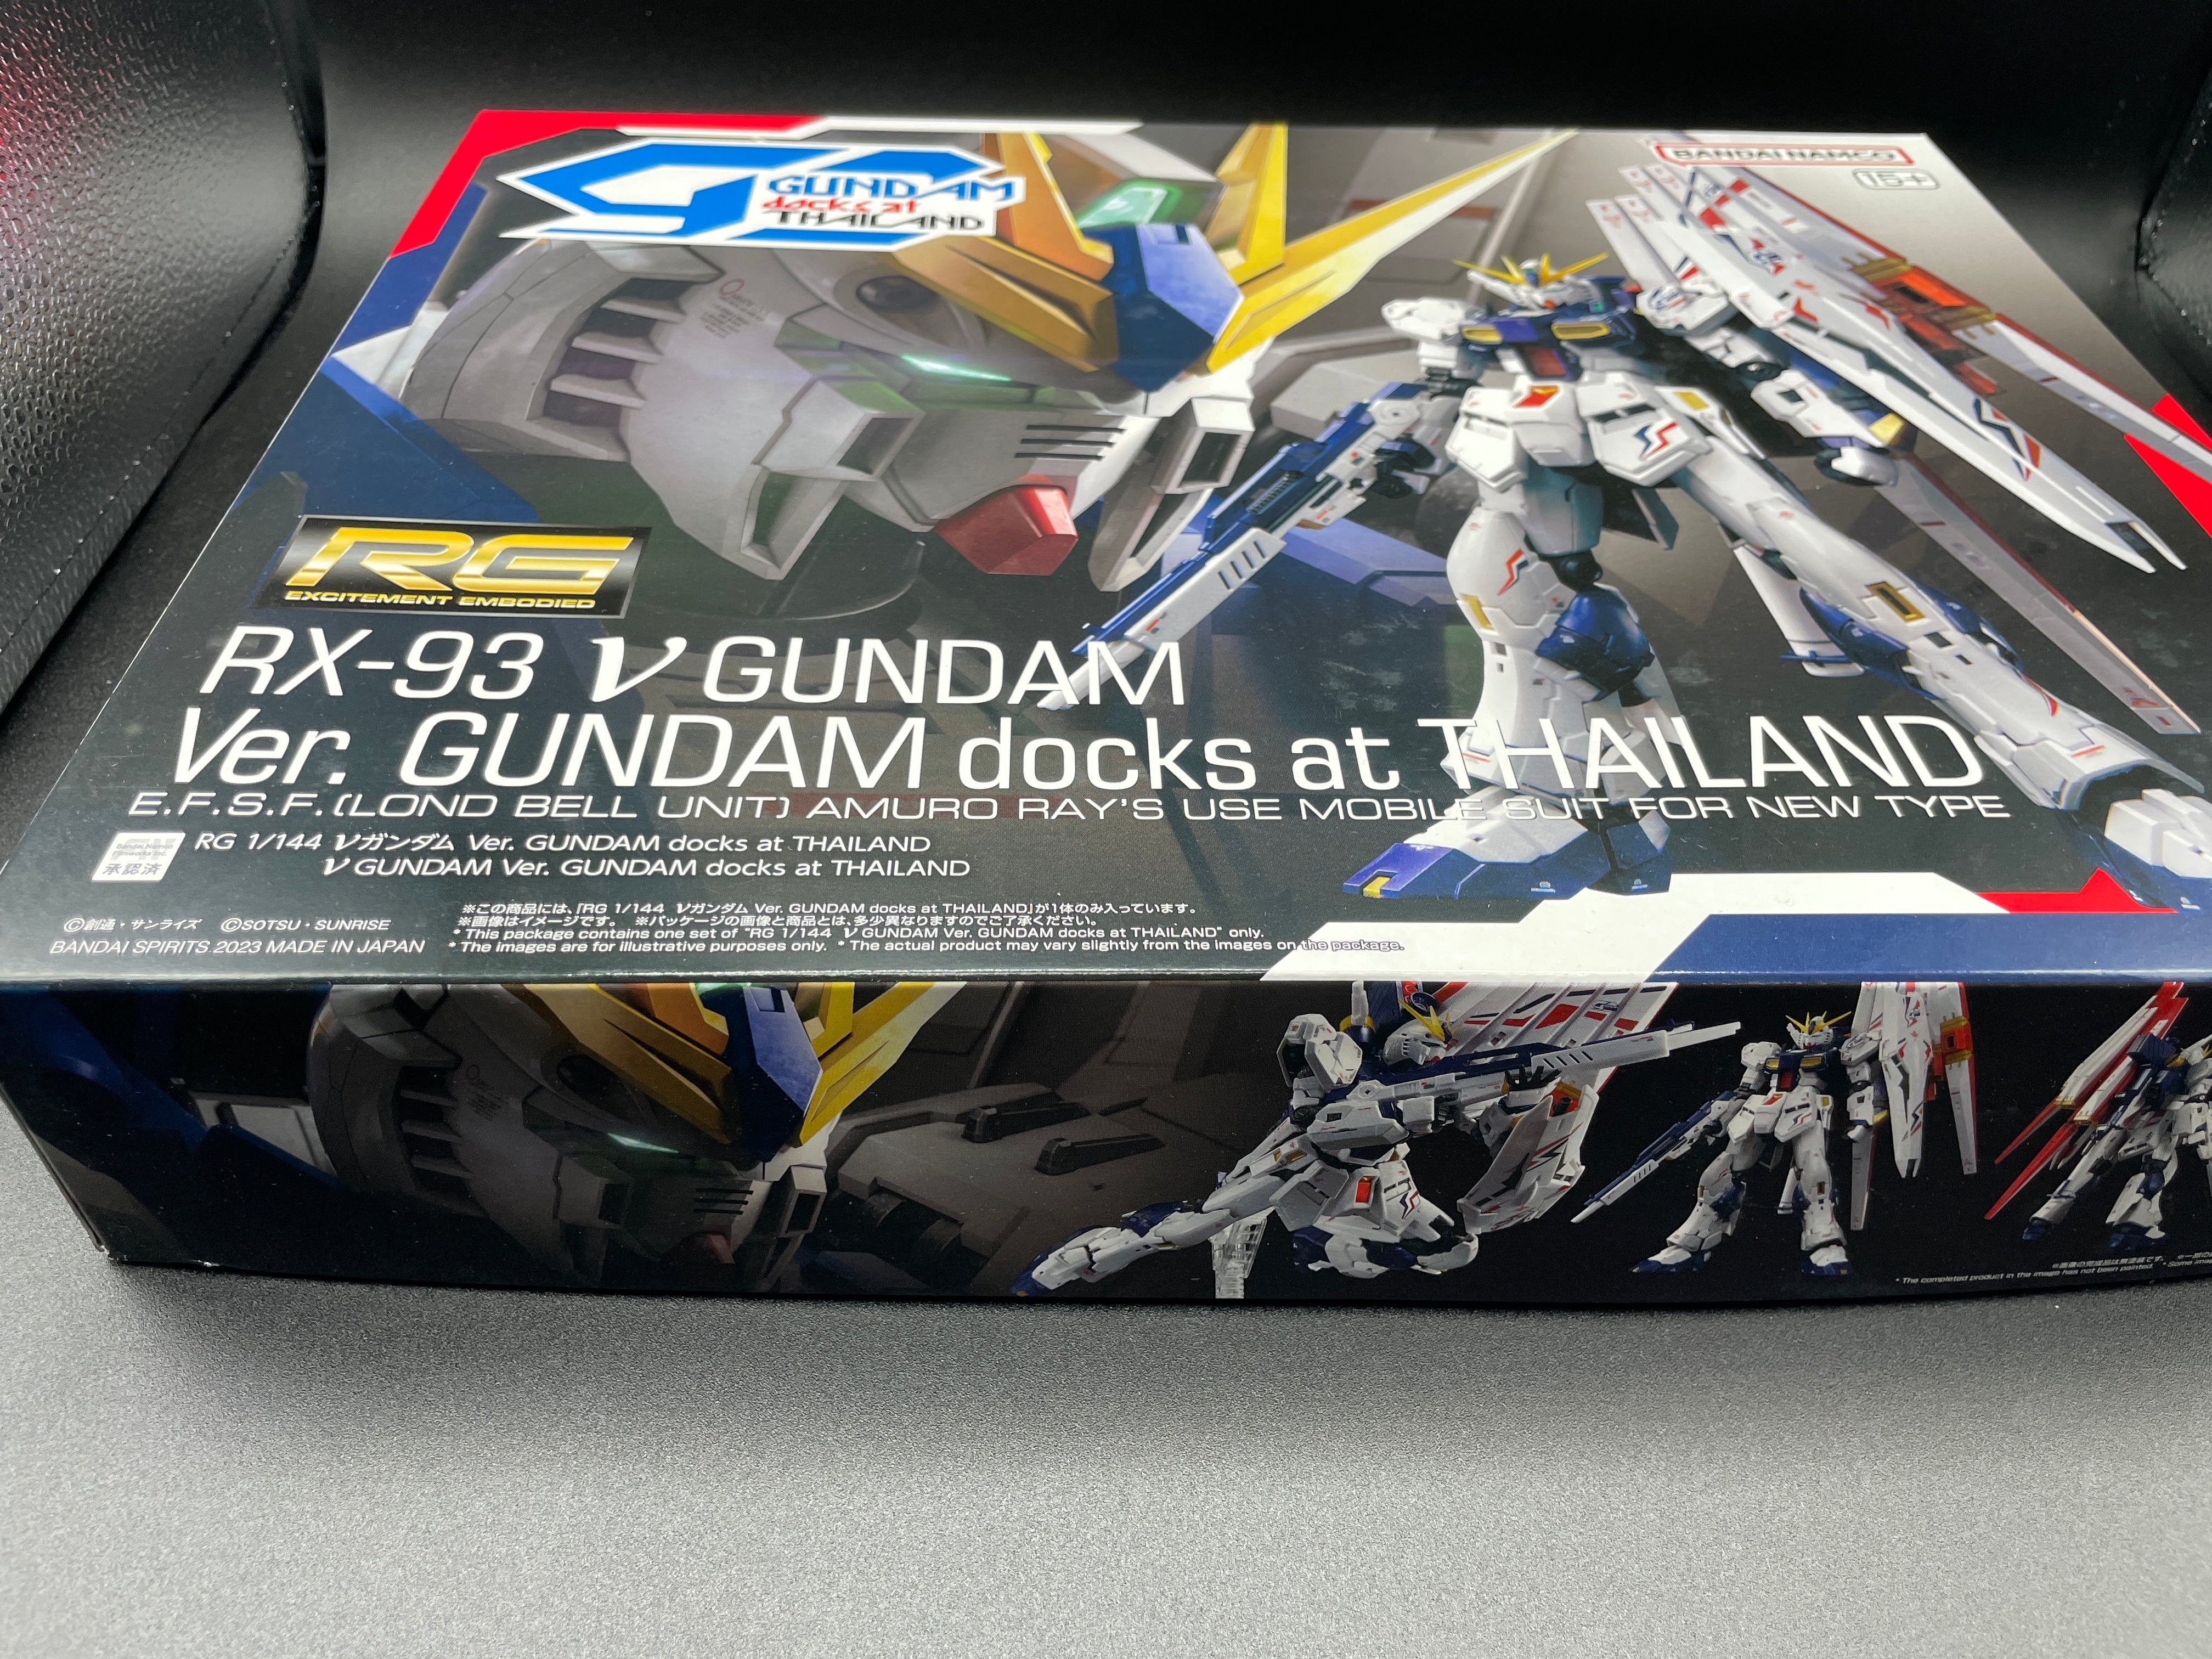 Bandai RG 1/144 RX-93 V Ver. Gundam Docks At Thailand Imported